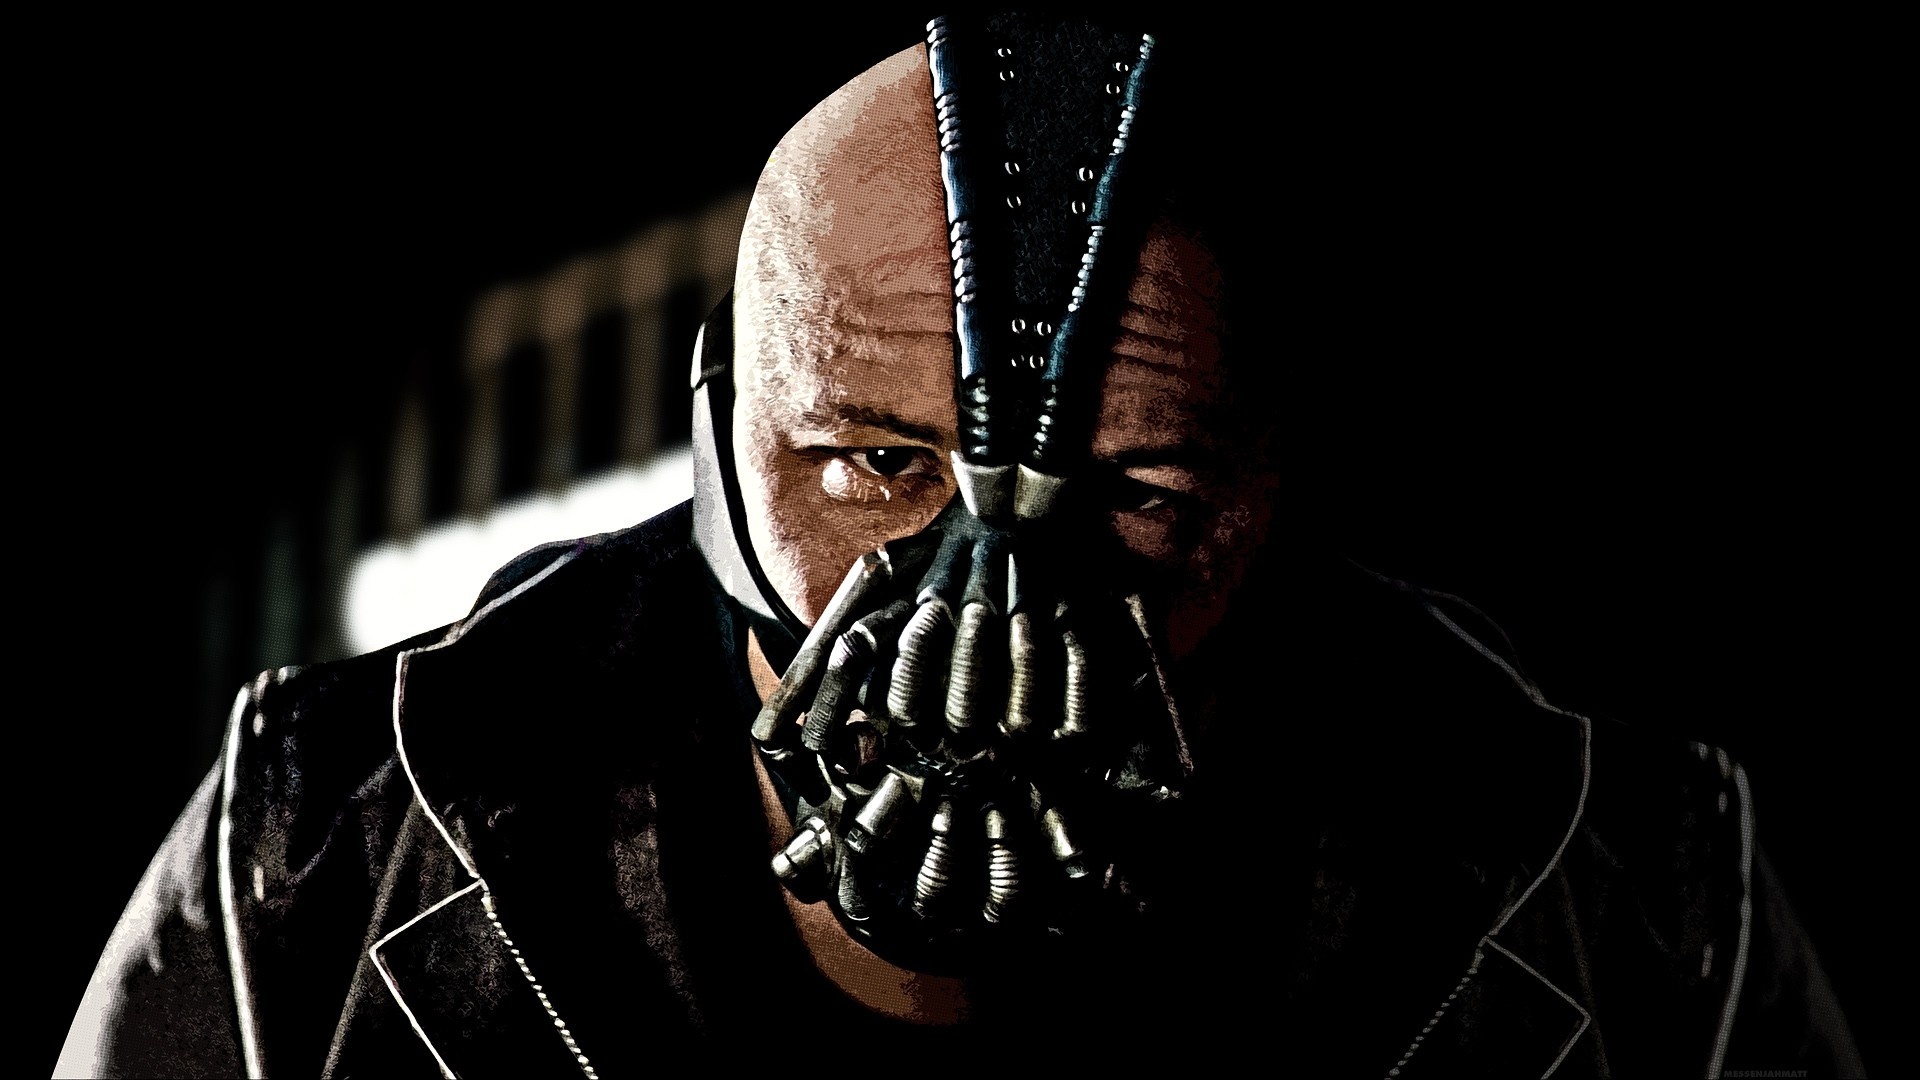 The Dark Knight Rises batman bane movies comics video games mask face